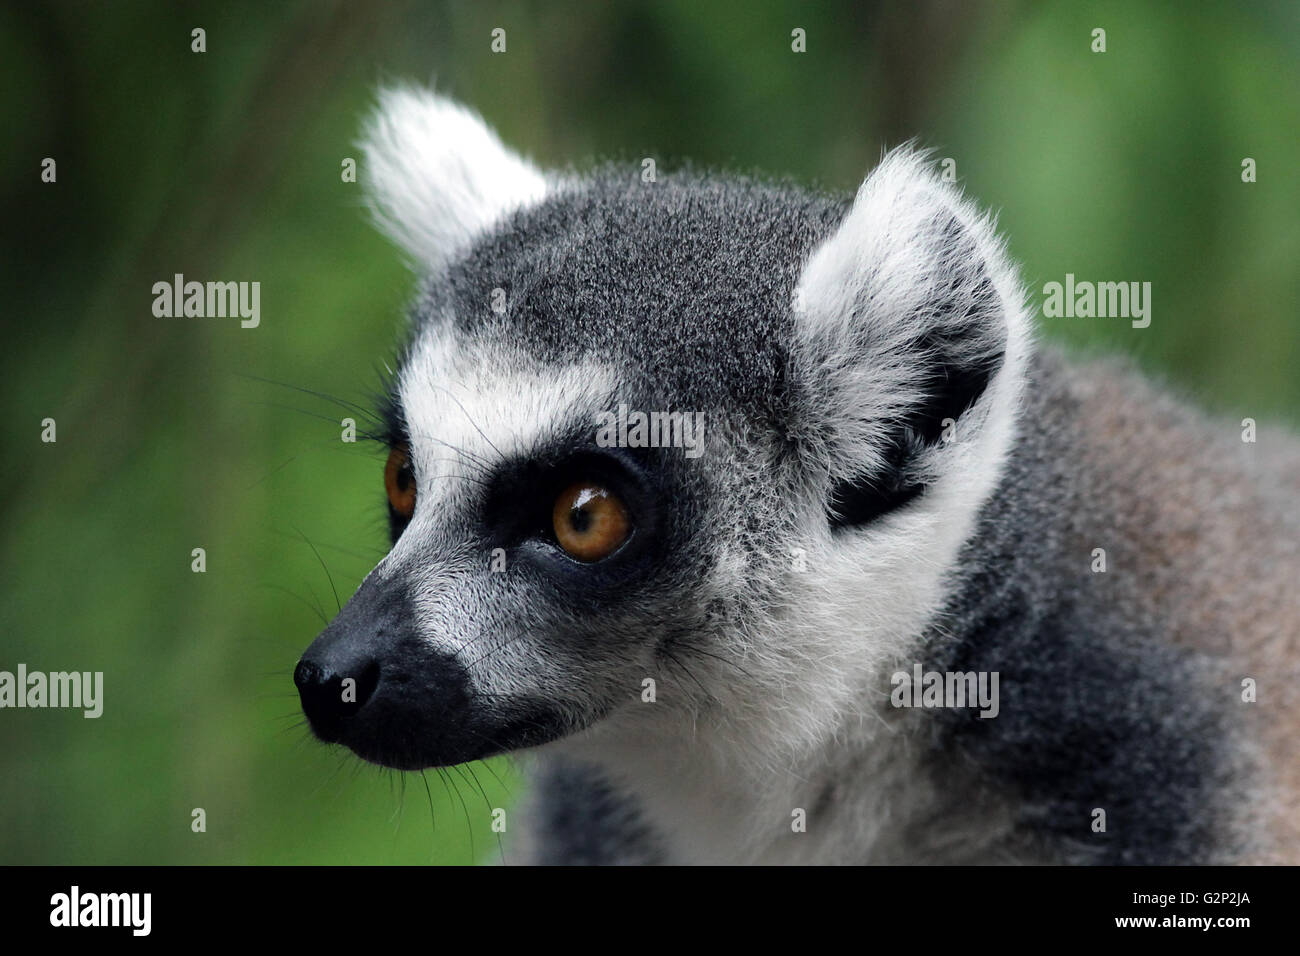 Anello-tailed lemur Lemur catta strepsirrhine primate Lemuridae il solo membro del genere Lemur. Foto Stock